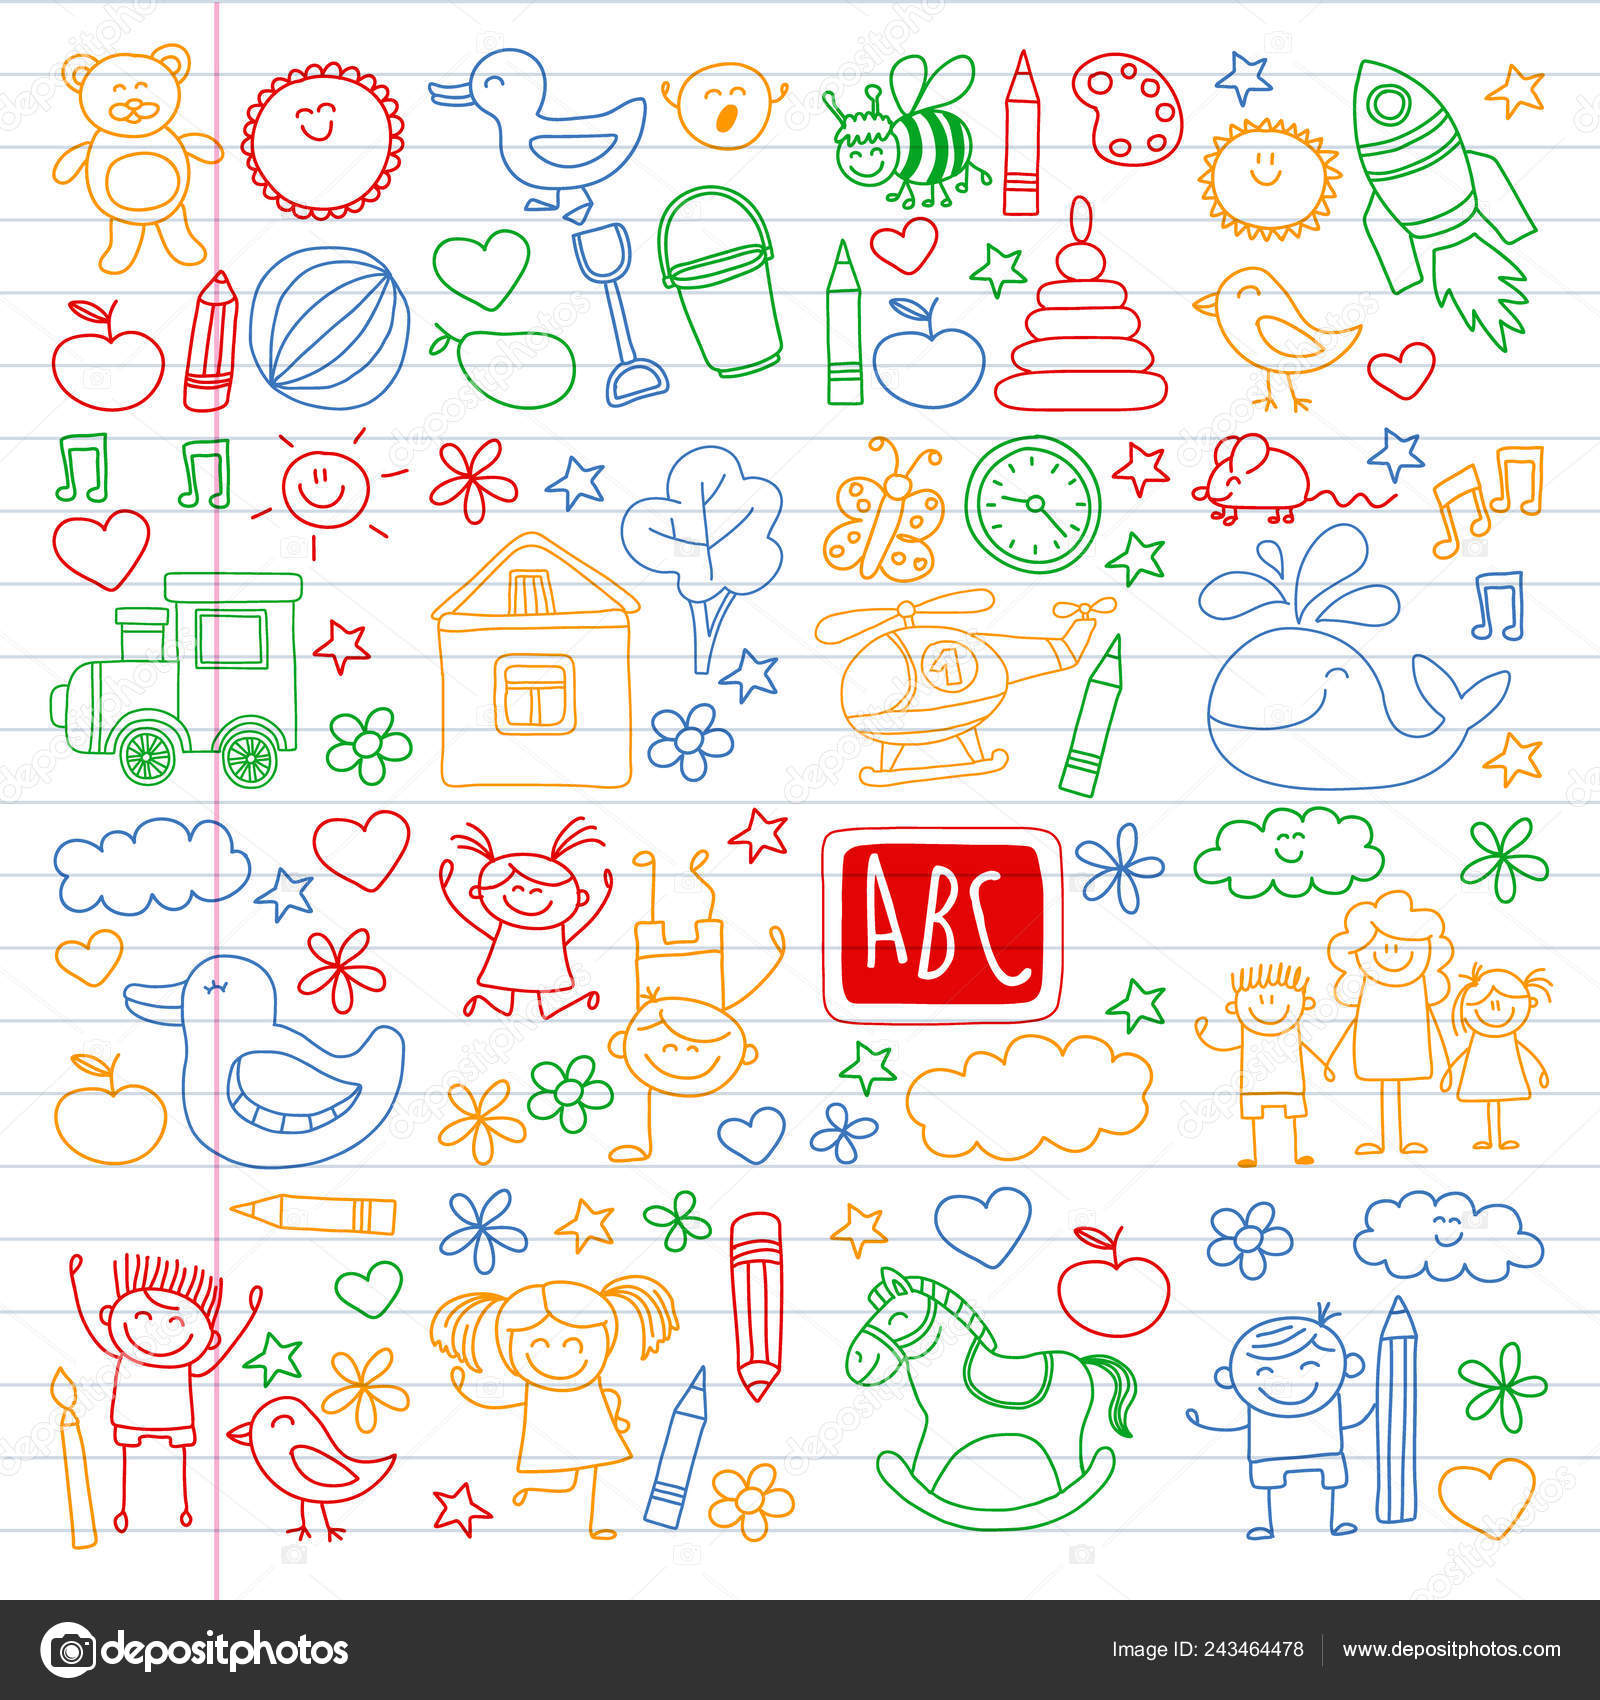 https://st4.depositphotos.com/2800301/24346/v/1600/depositphotos_243464478-stock-illustration-vector-doodle-set-with-kindergarten.jpg